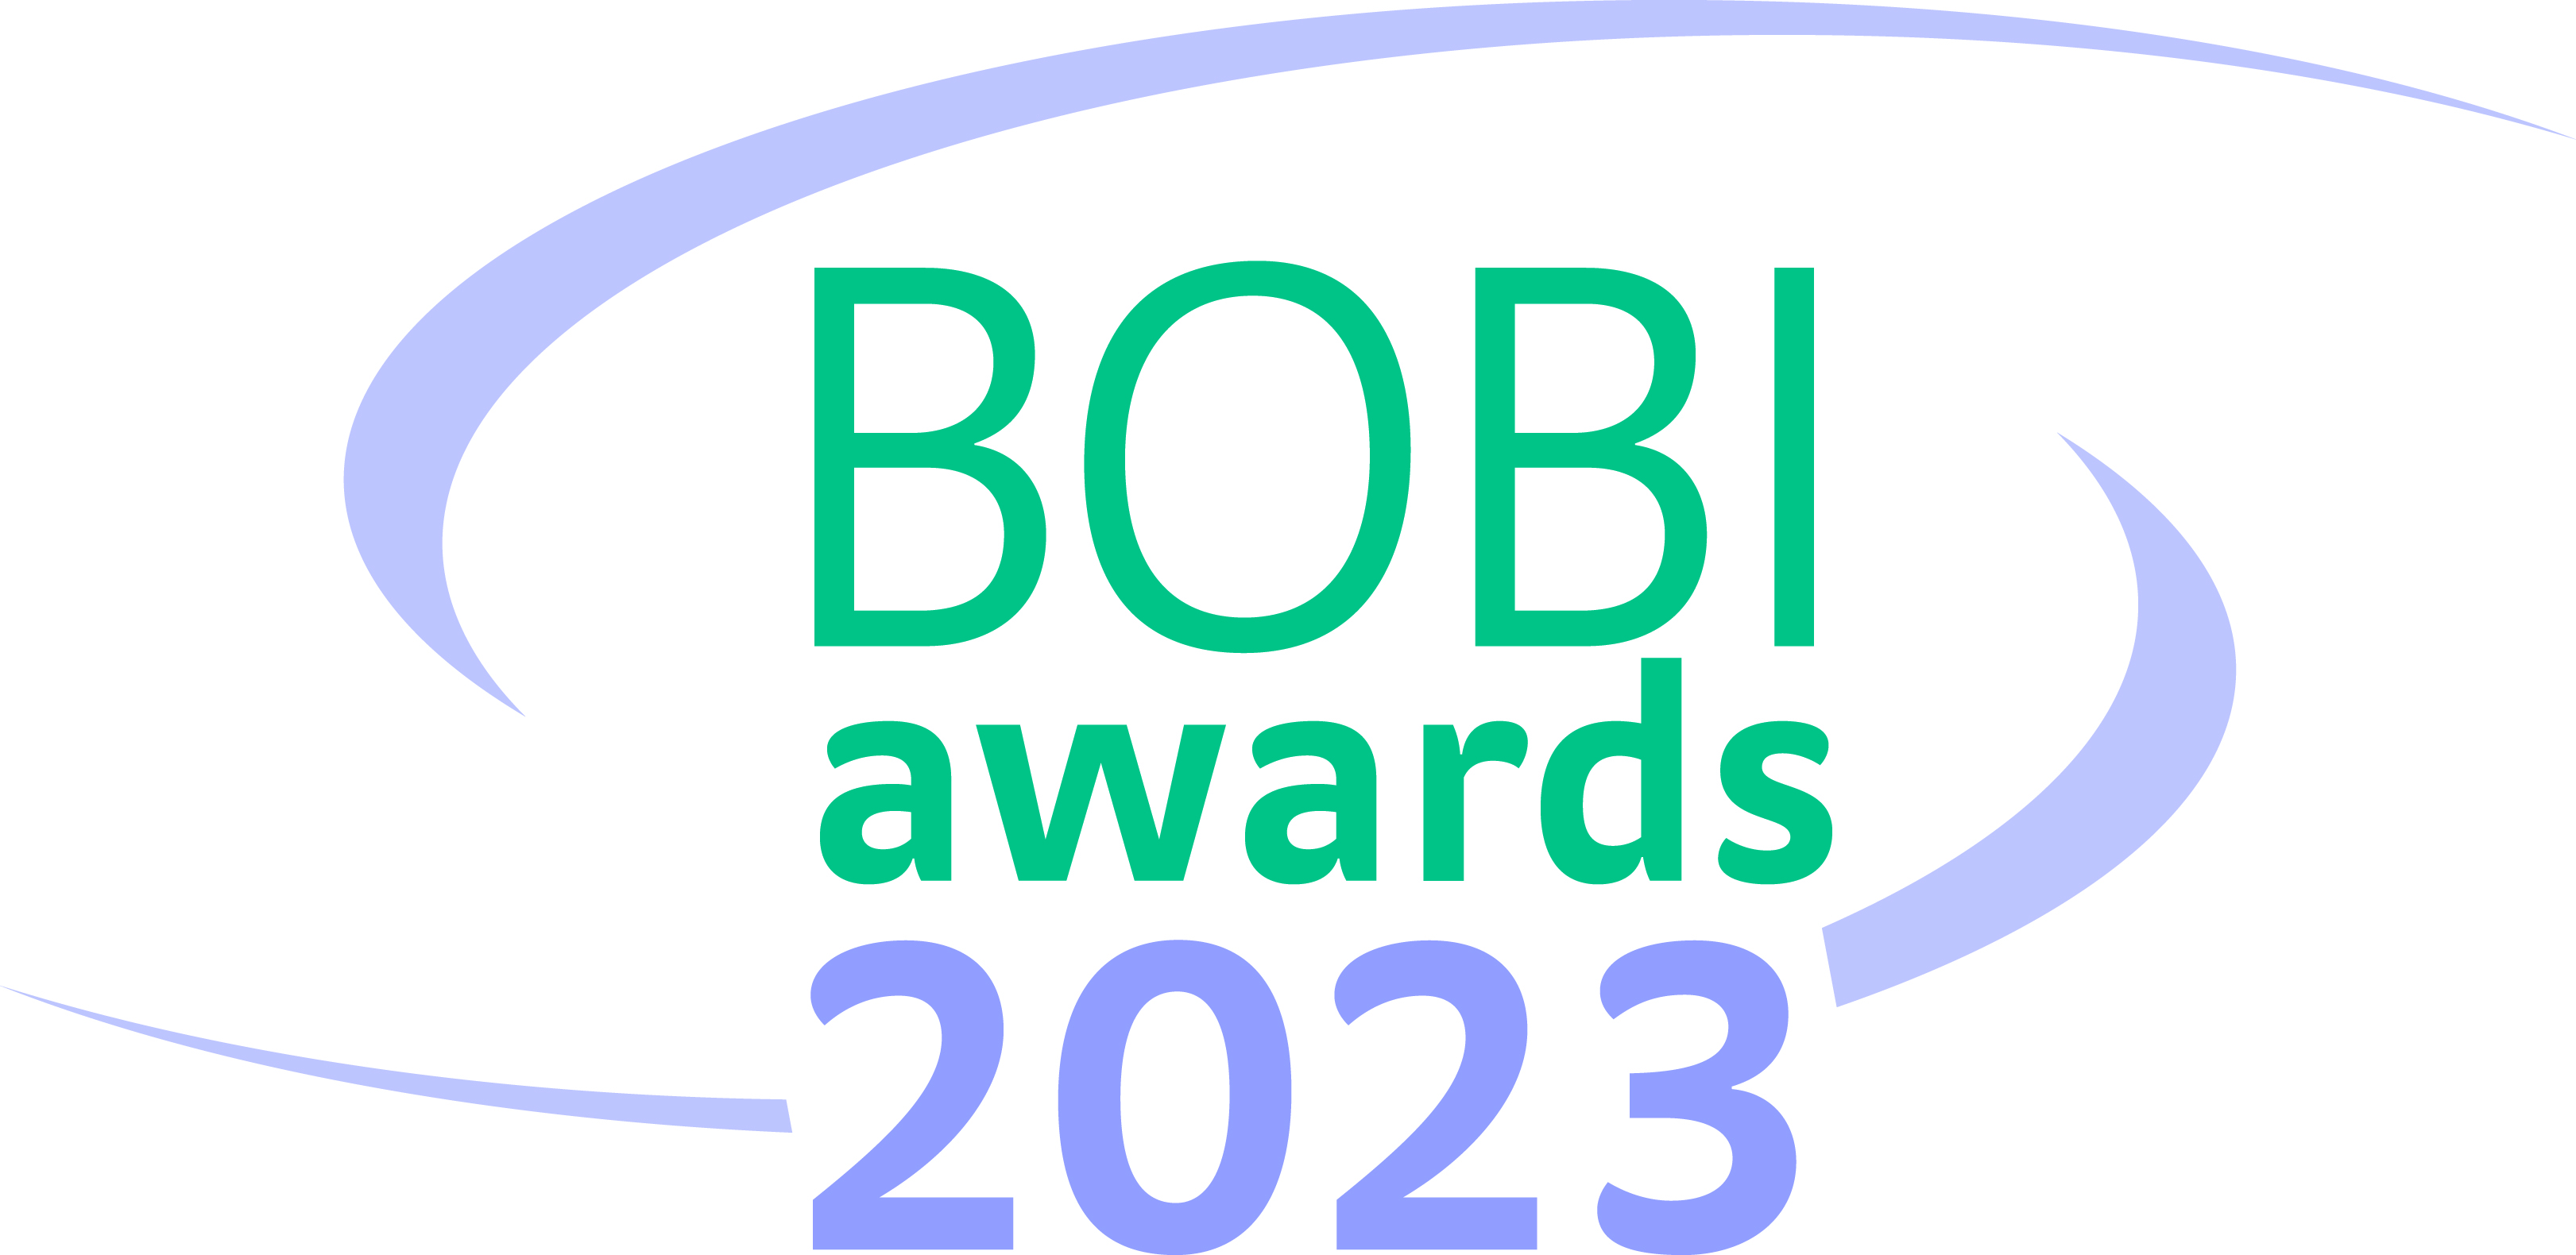 BOBI Awards 2023 - Best Business Impact winner